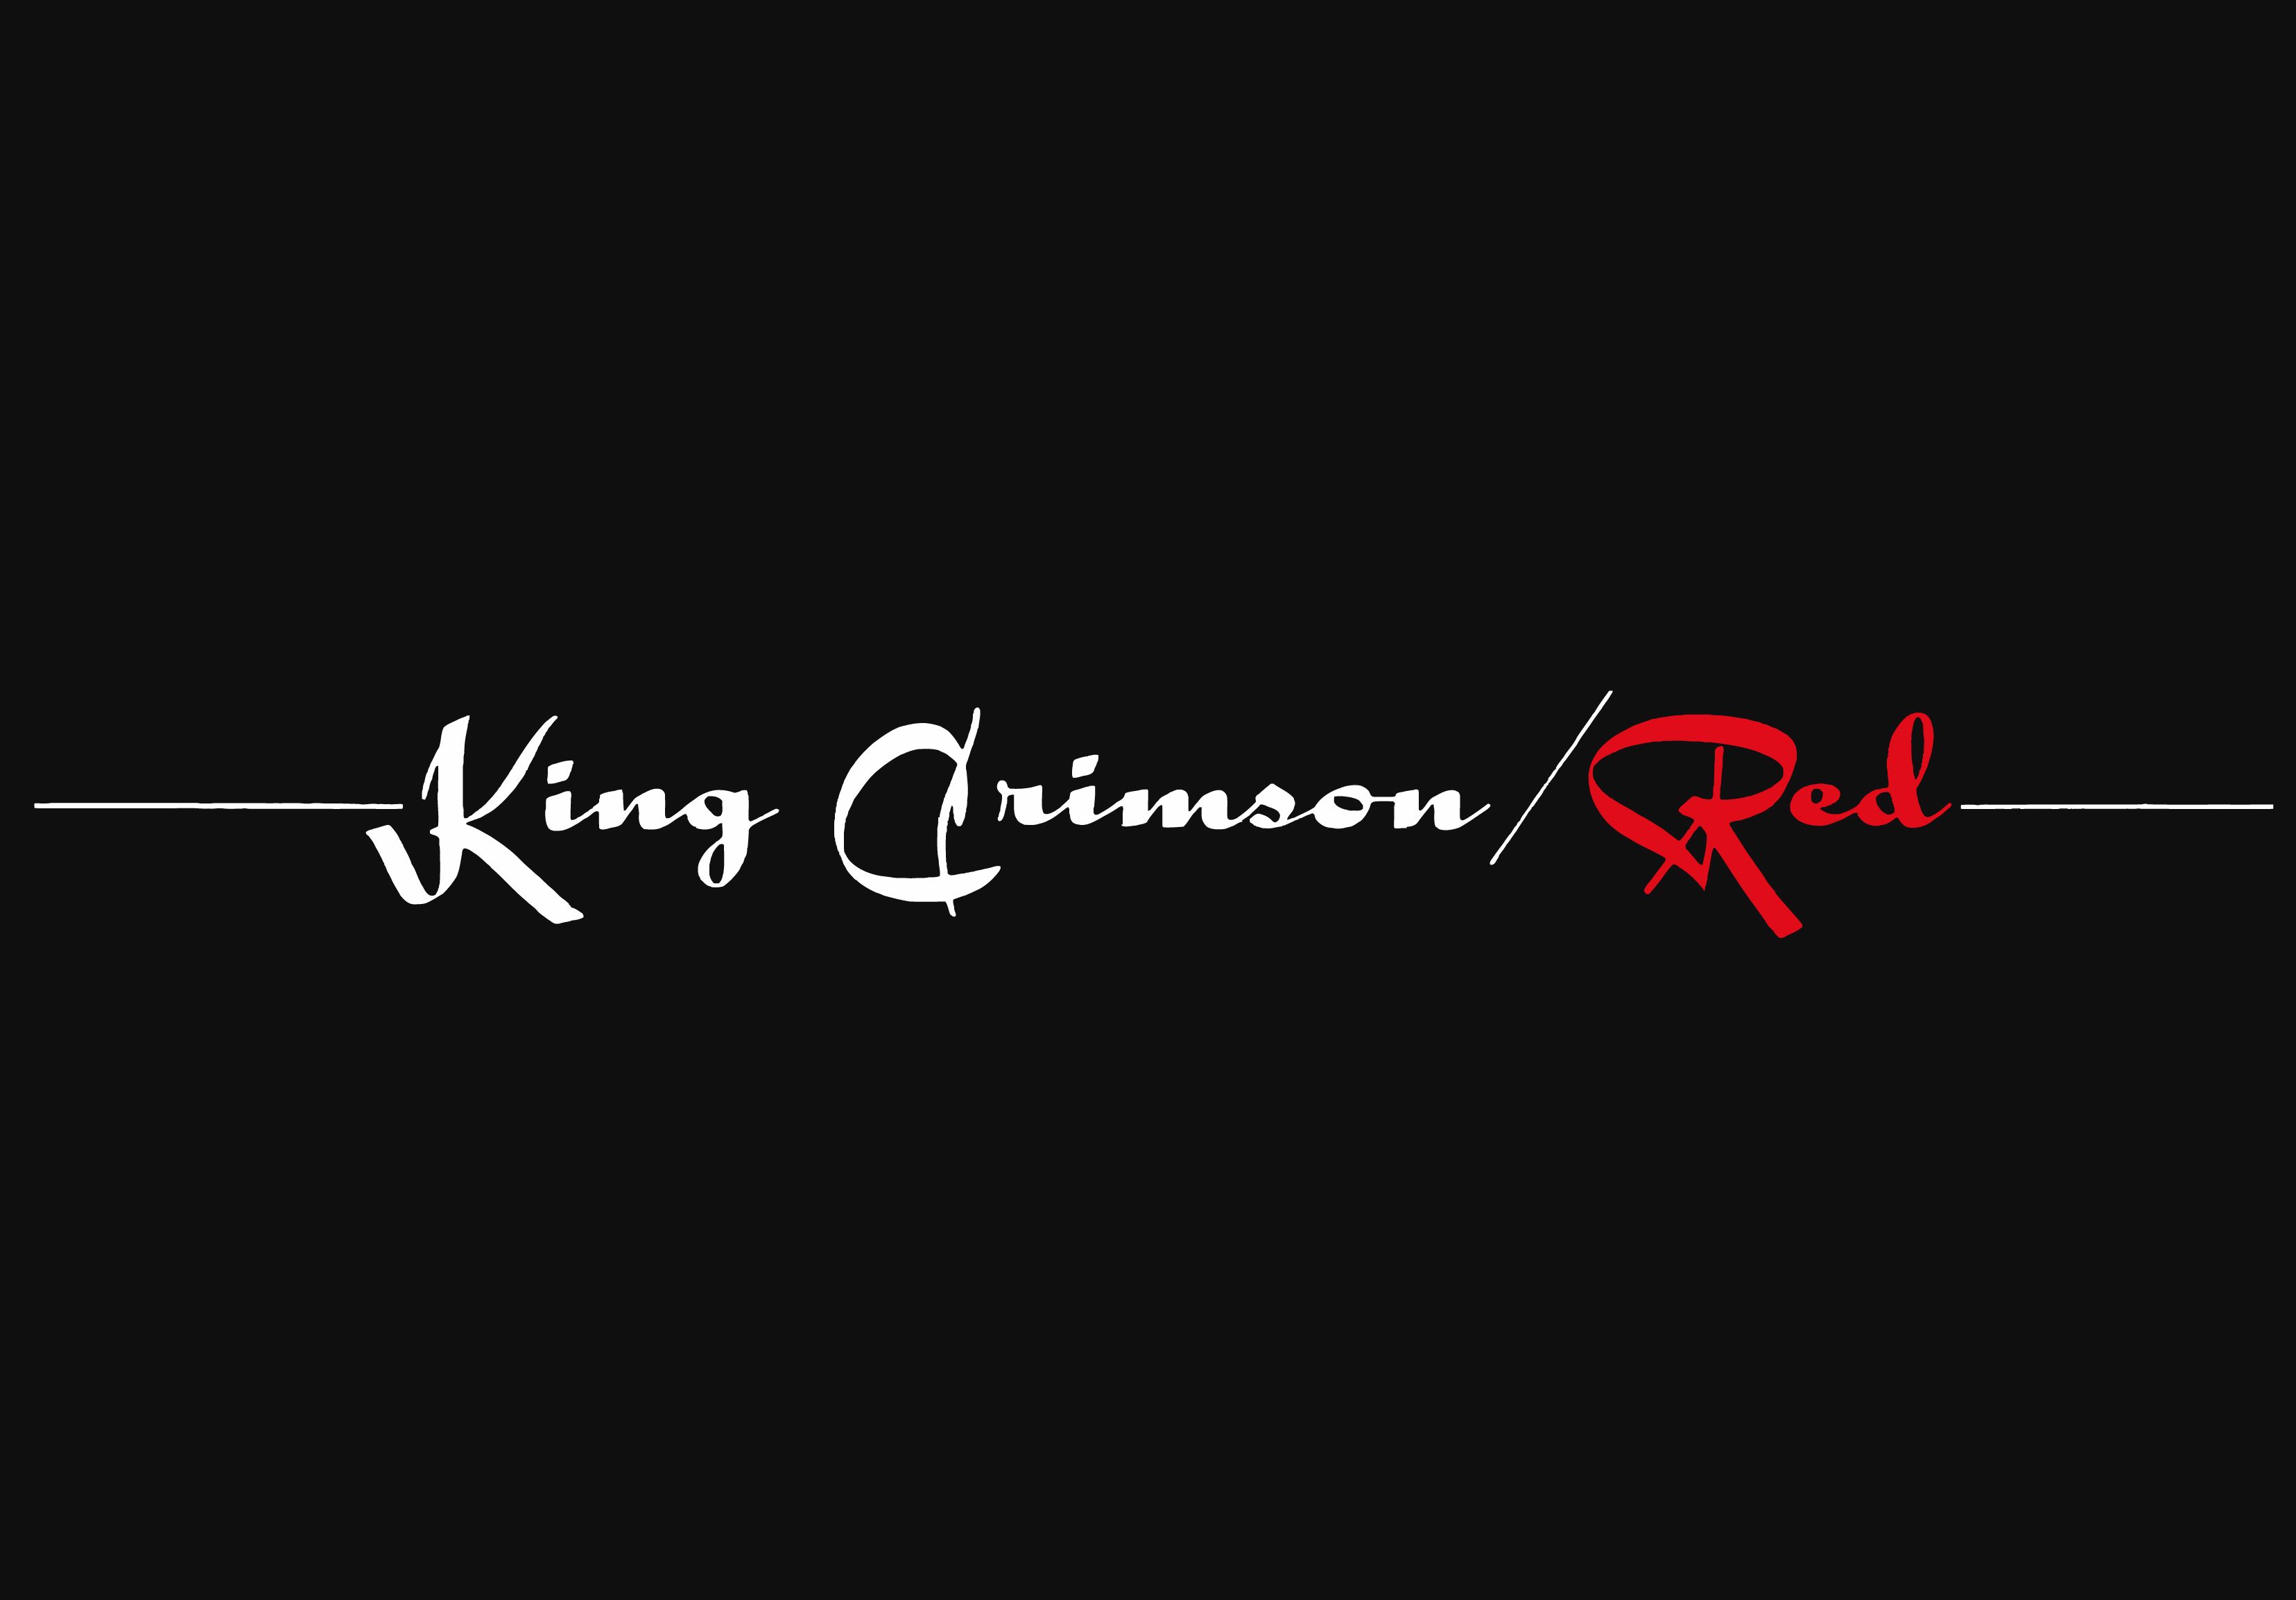 King Crimson Red by ghigo1972 on DeviantArt